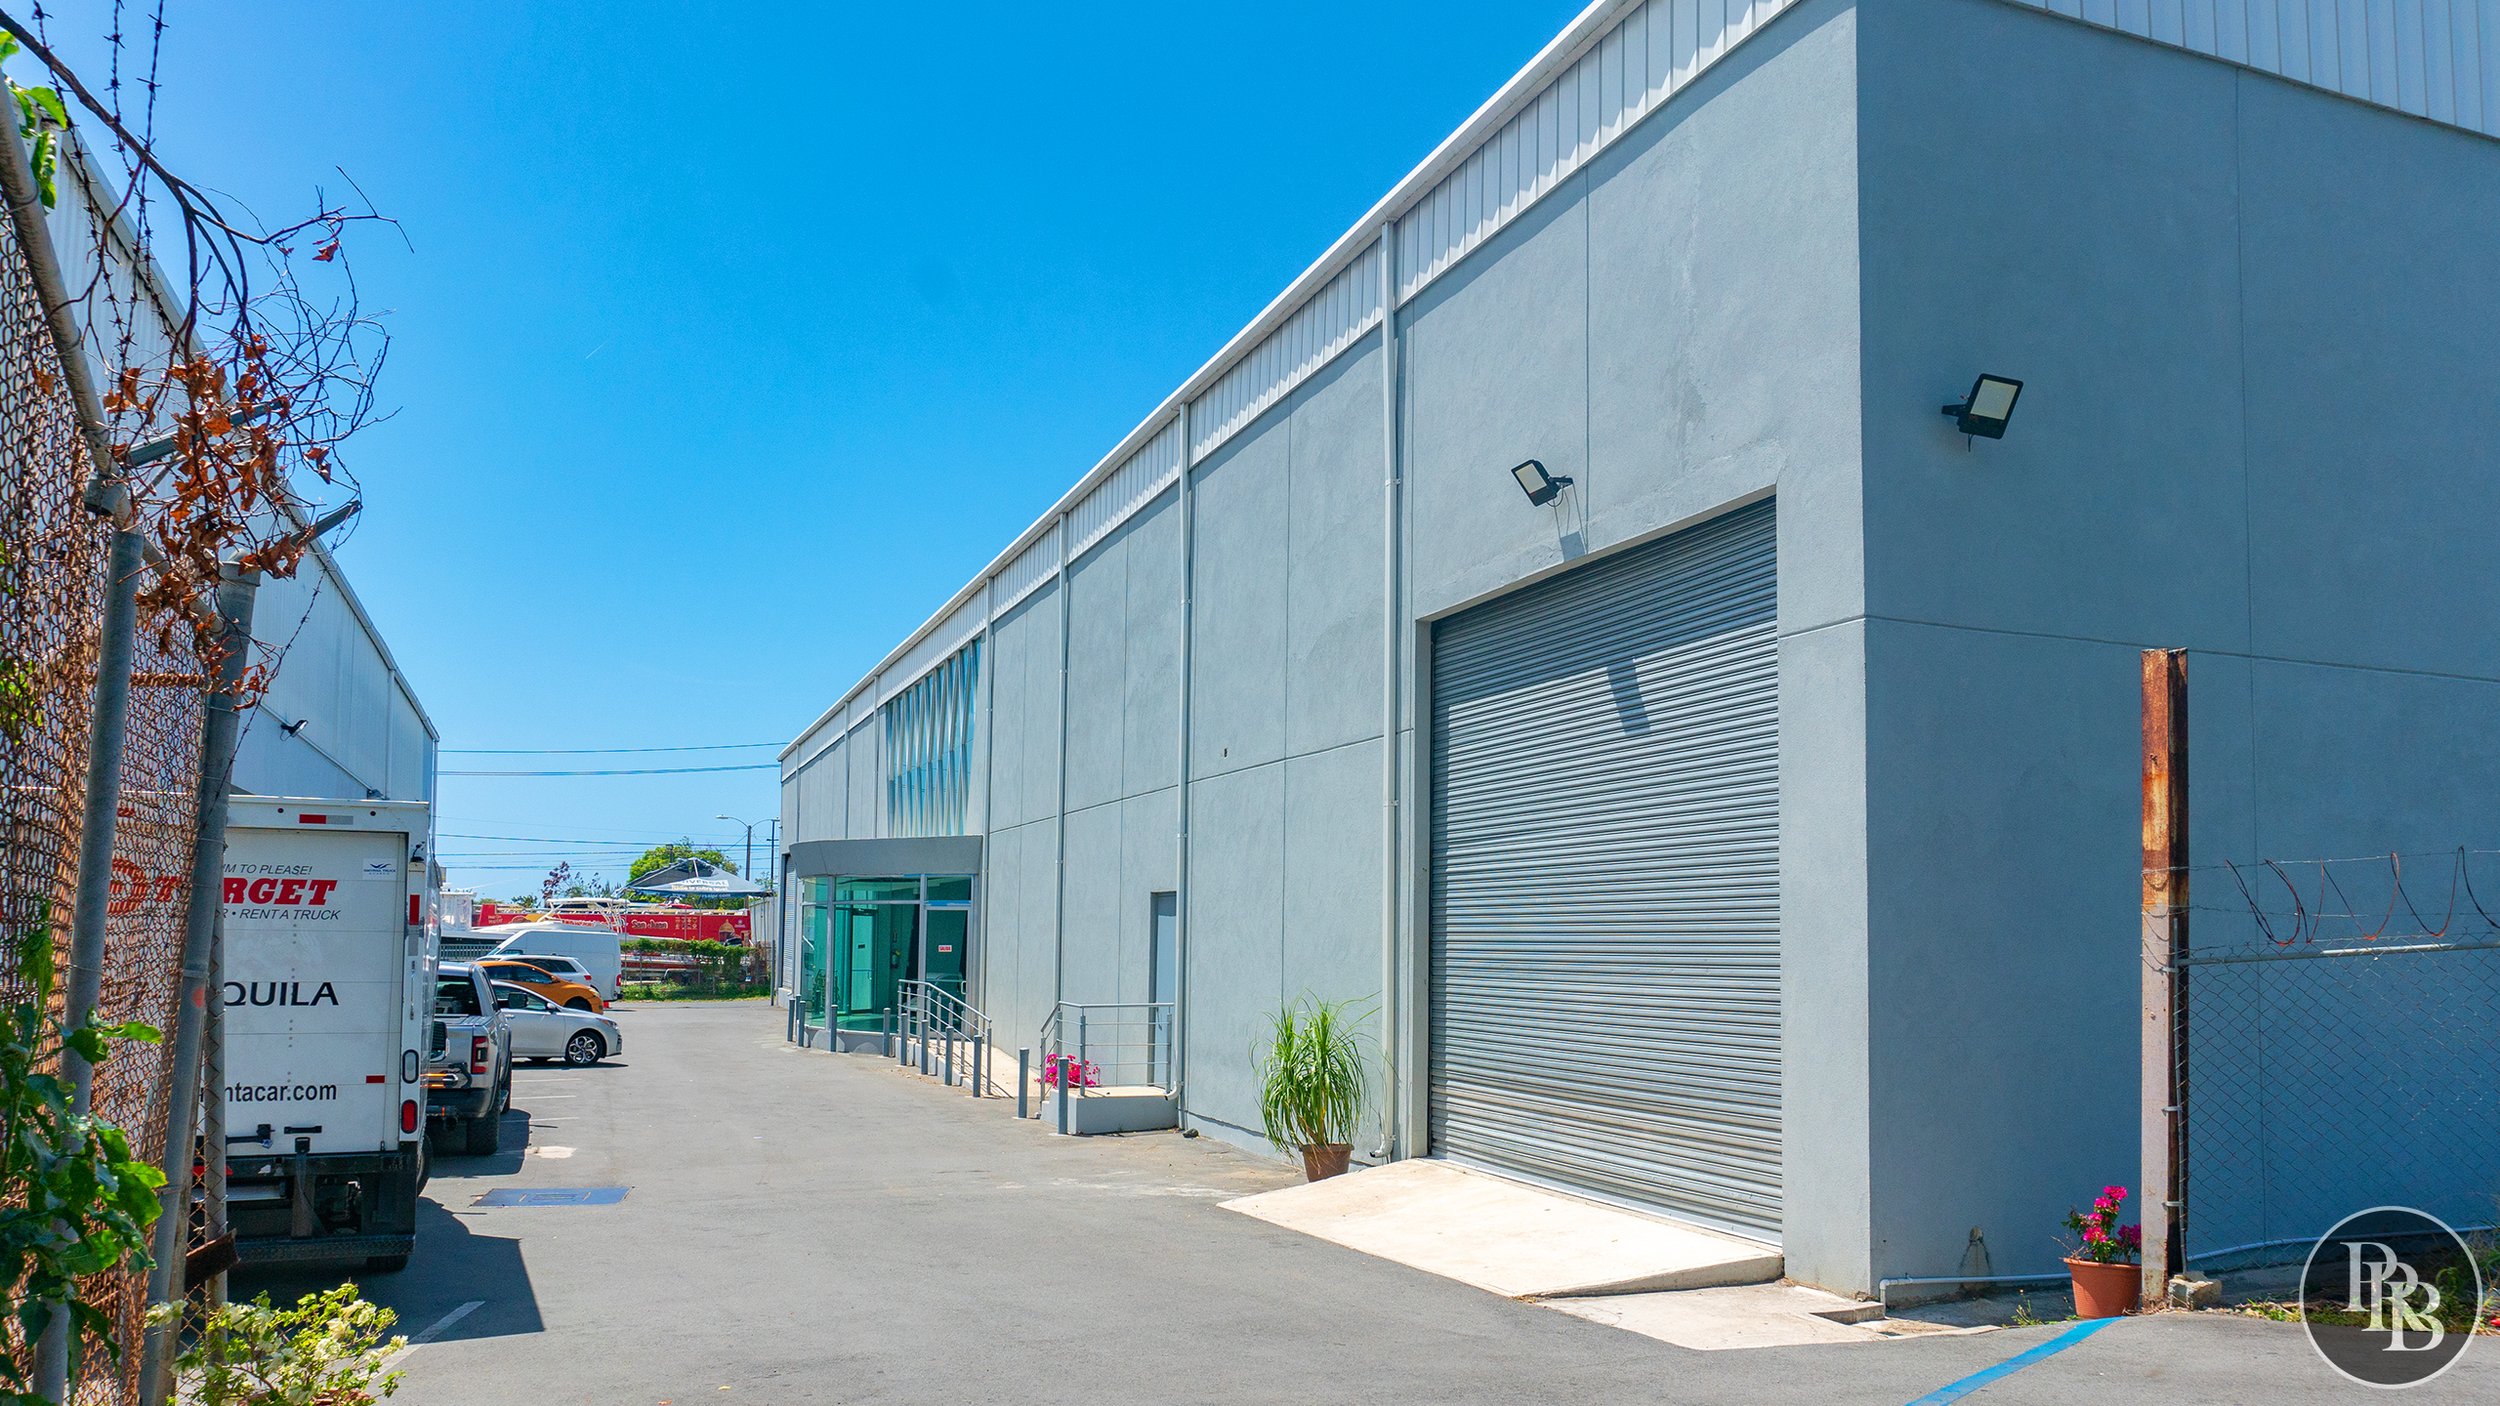 Miramar 41,000 sqft warehouse PRB logo #12.jpg